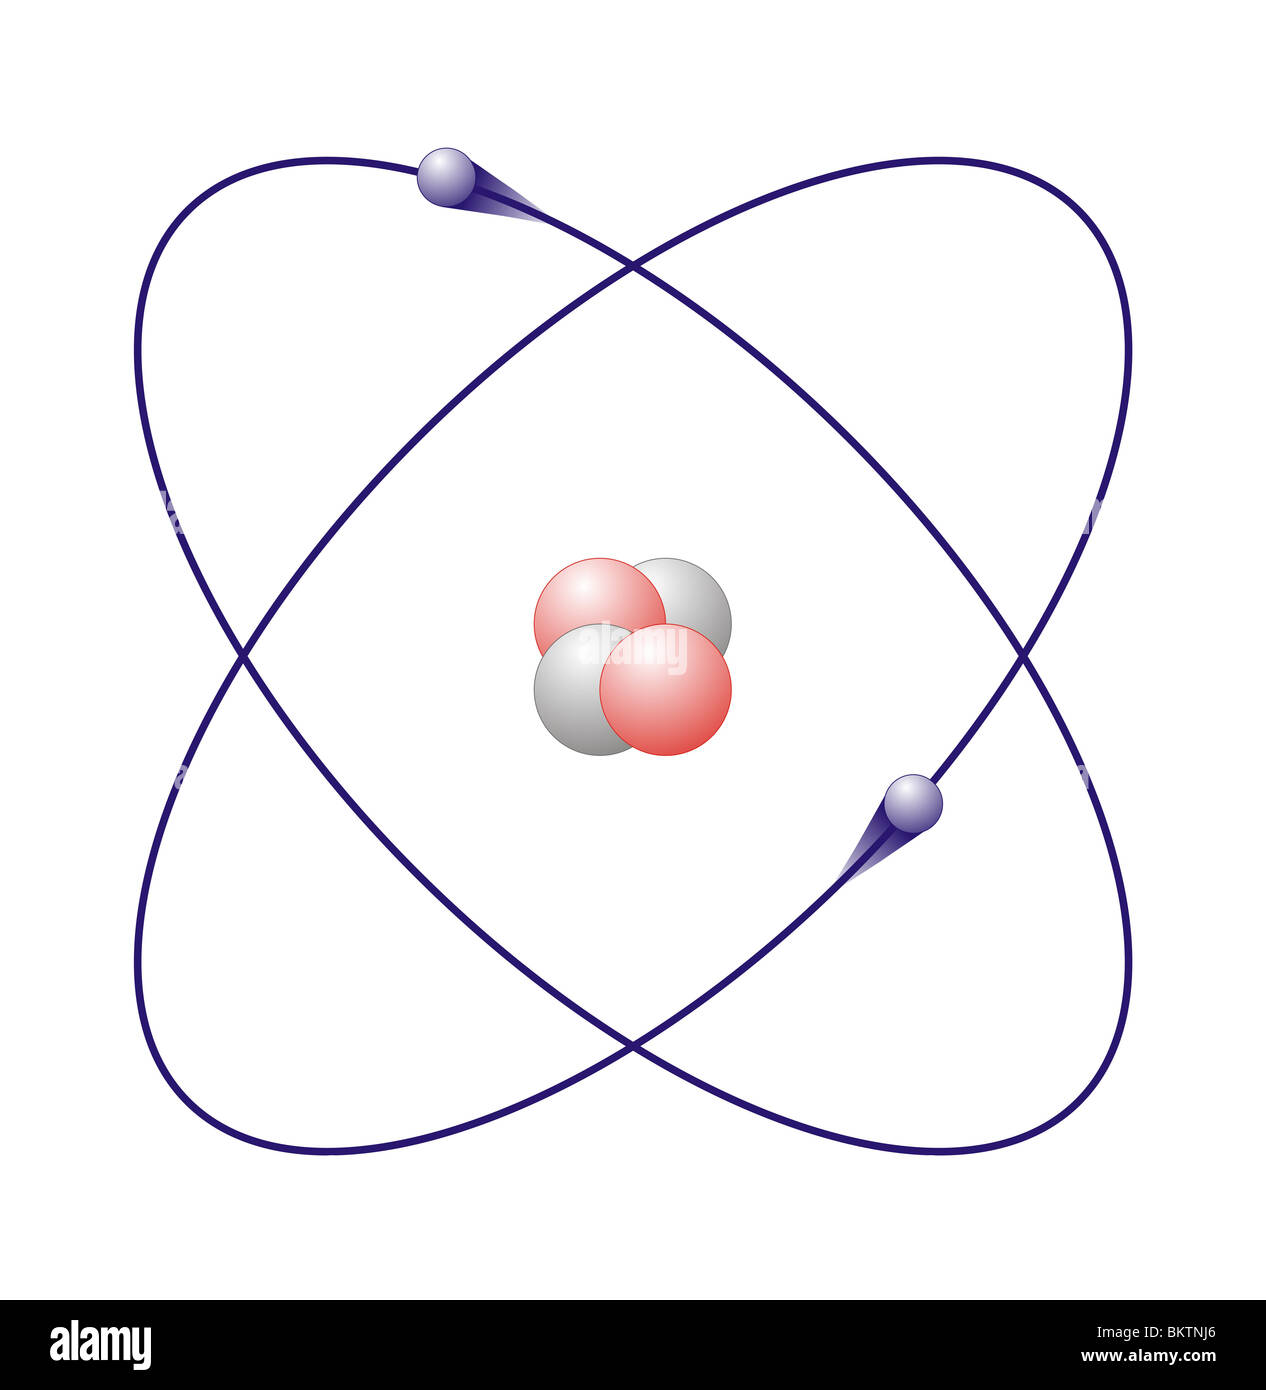 Arriba 50+ imagen modelo atomico de helio